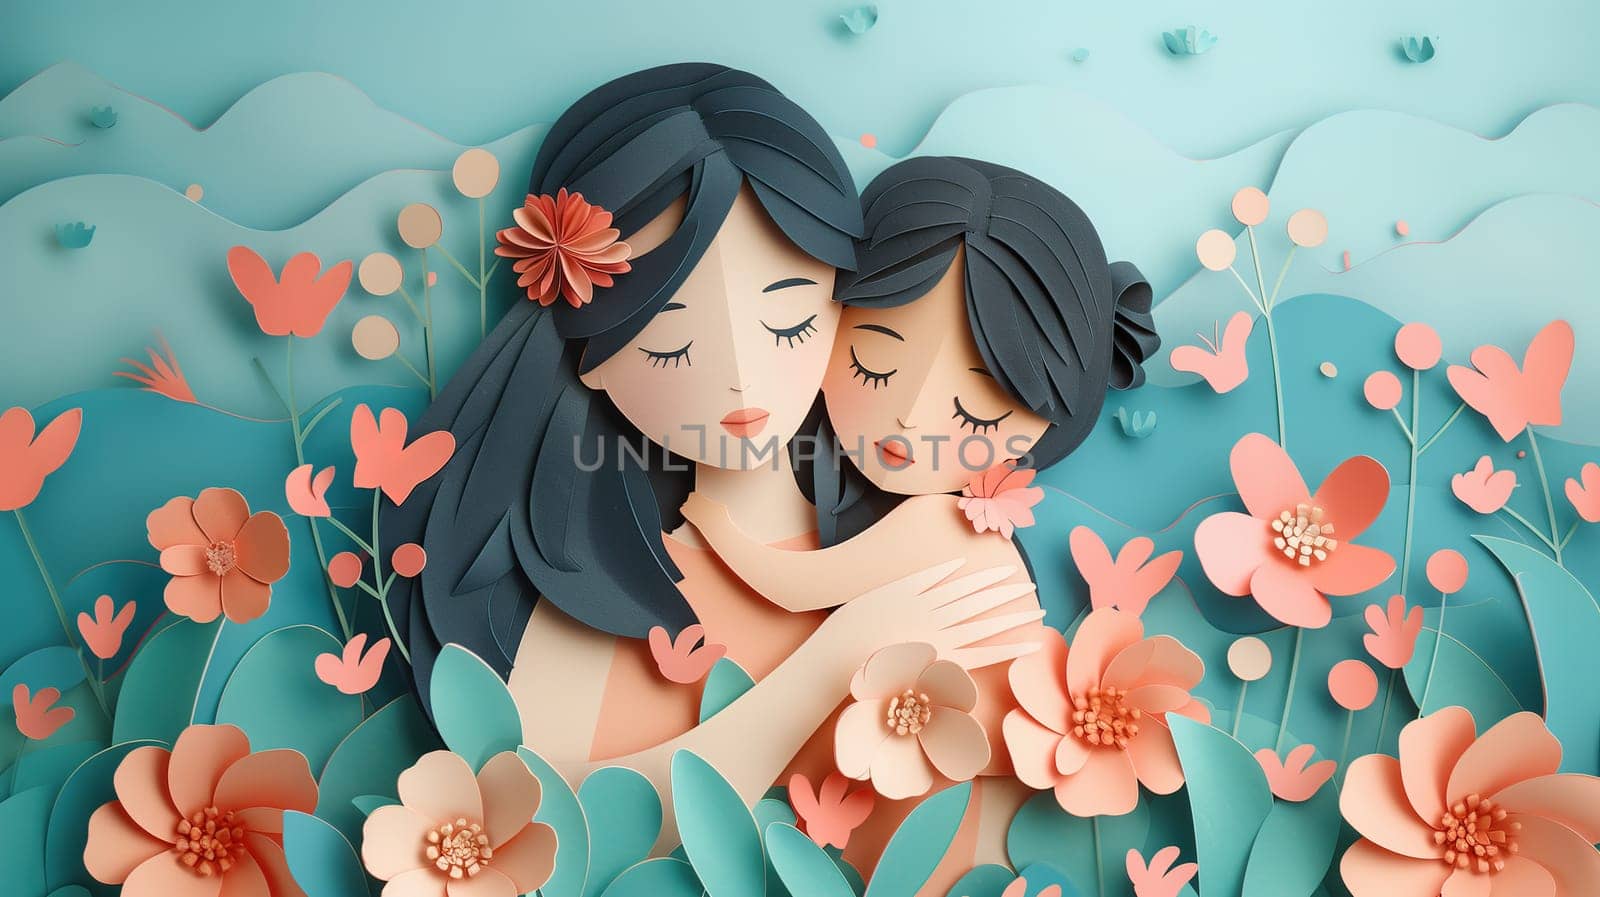 Two Women Hugging in a Field of Flowers by TRMK